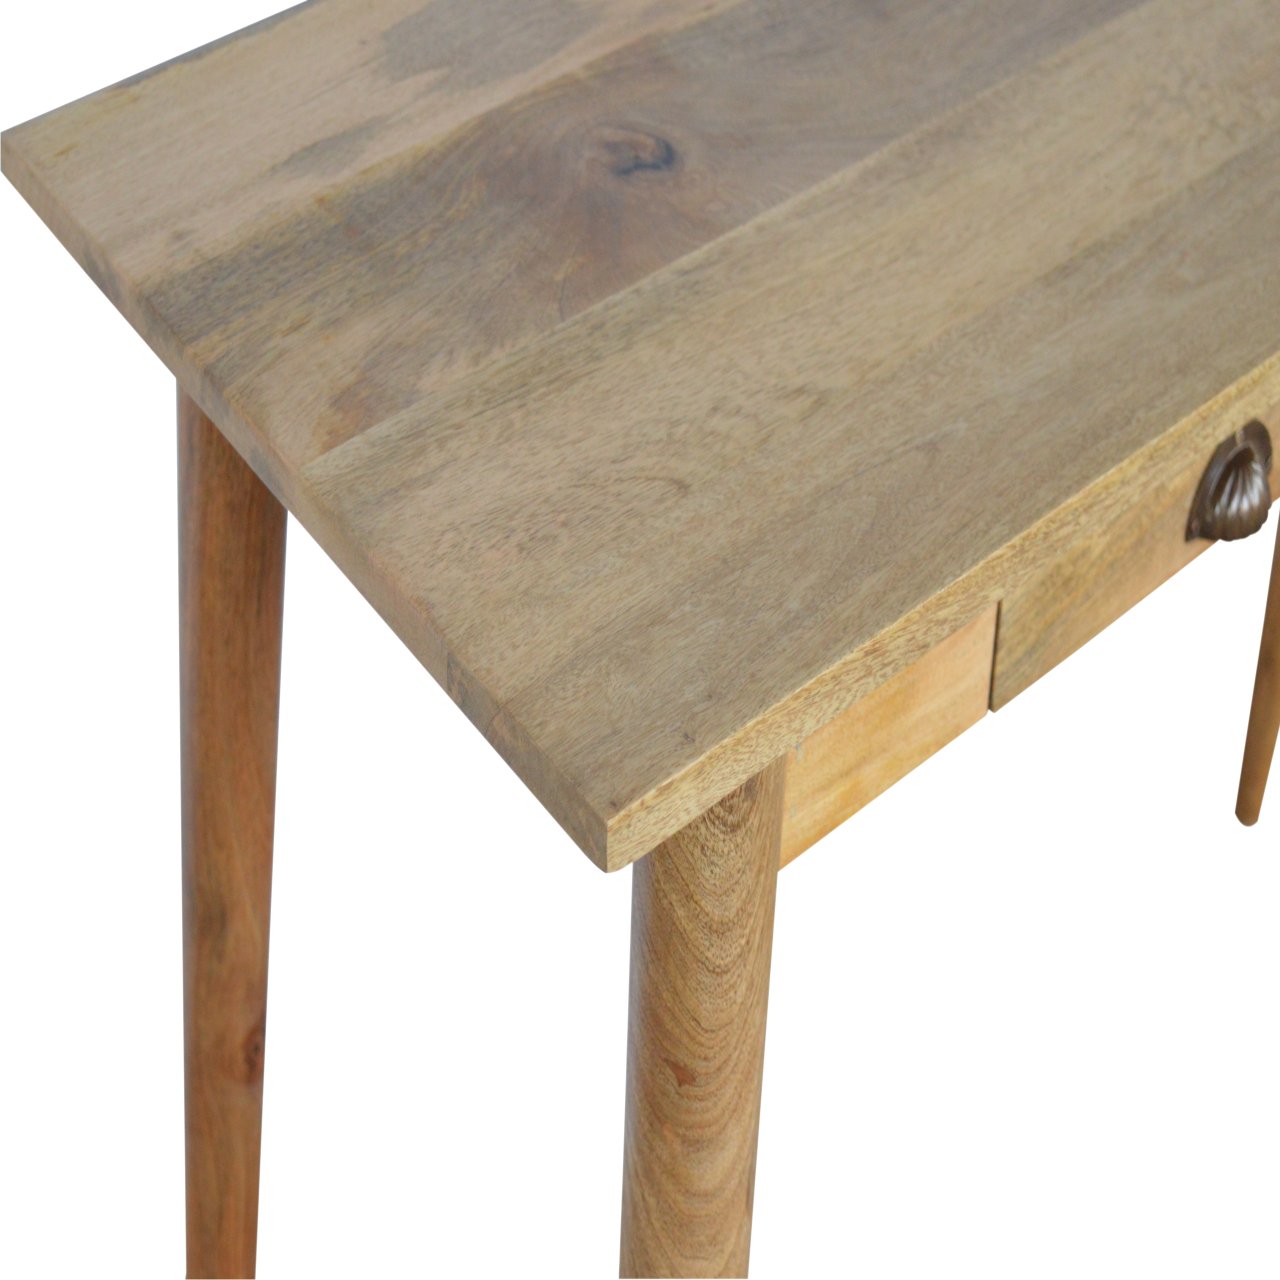 JONAH Handmade Nordic Home Office Desk in Solid Wood with 2 Drawers | malletandplane.com